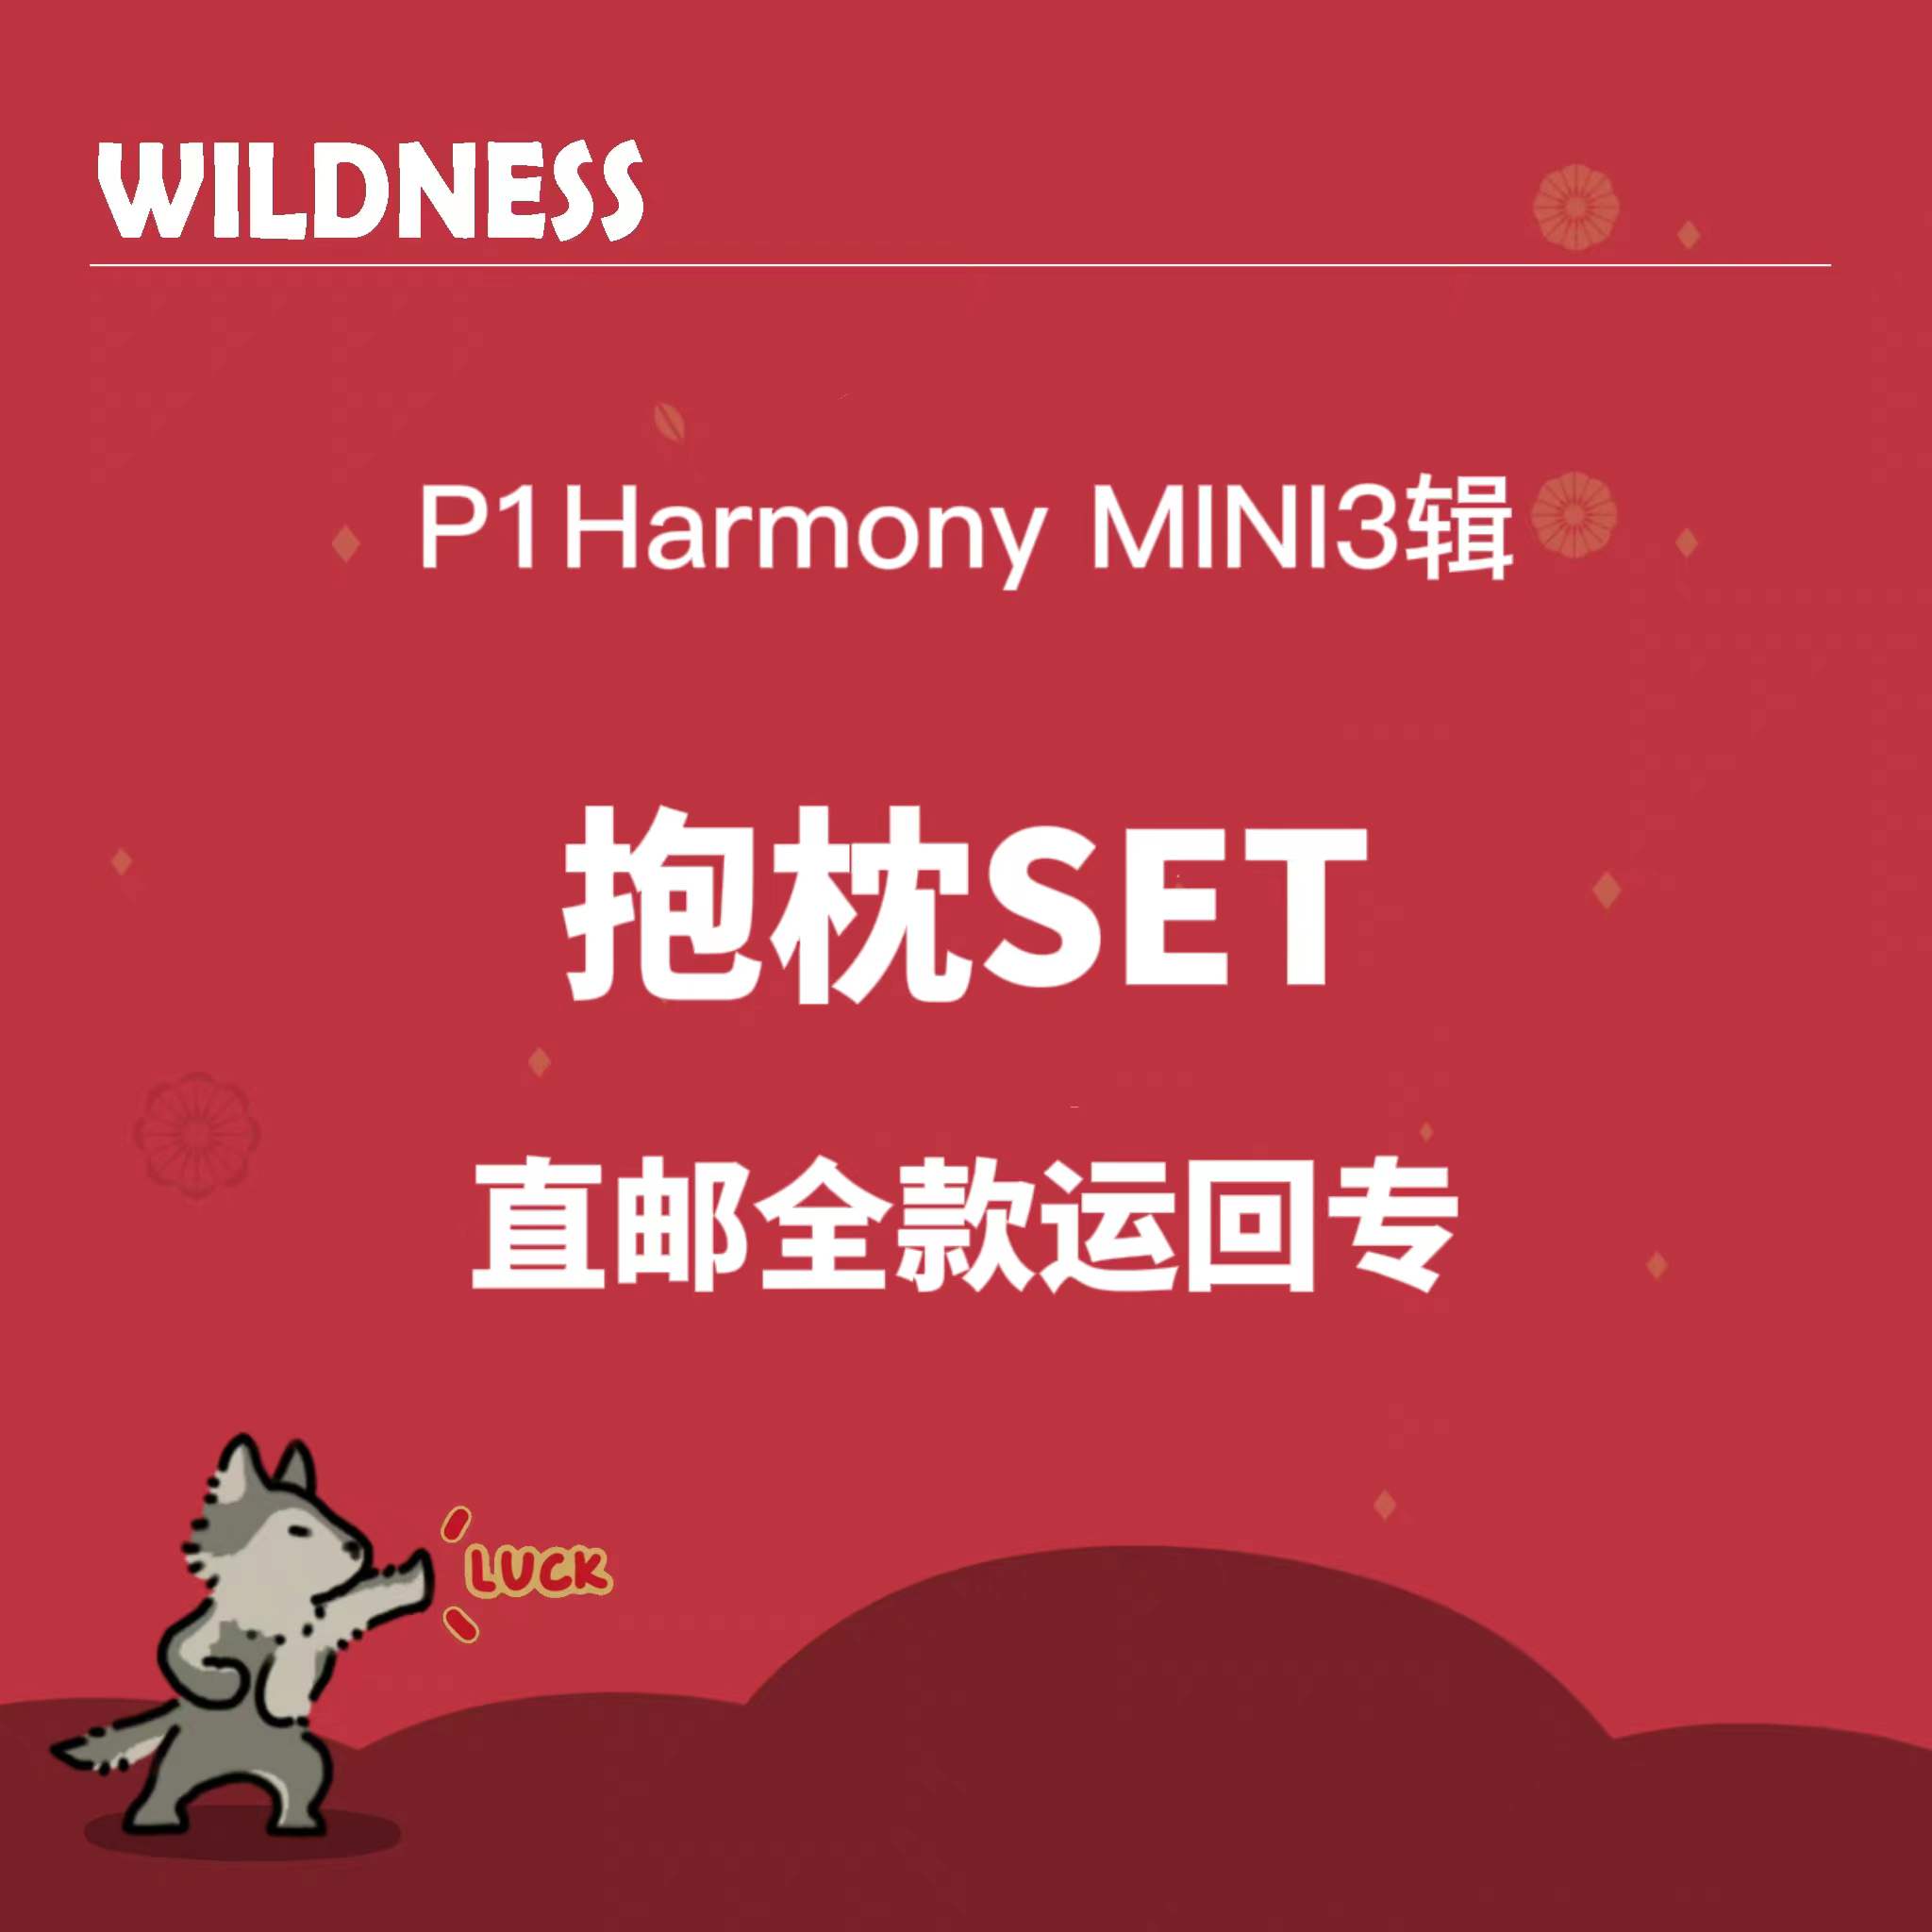 [全款 抱枕SET] P1Harmony - 3rd 迷你专辑 [DISHARMONY : FIND OUT]_Wildness_尹起昊个站